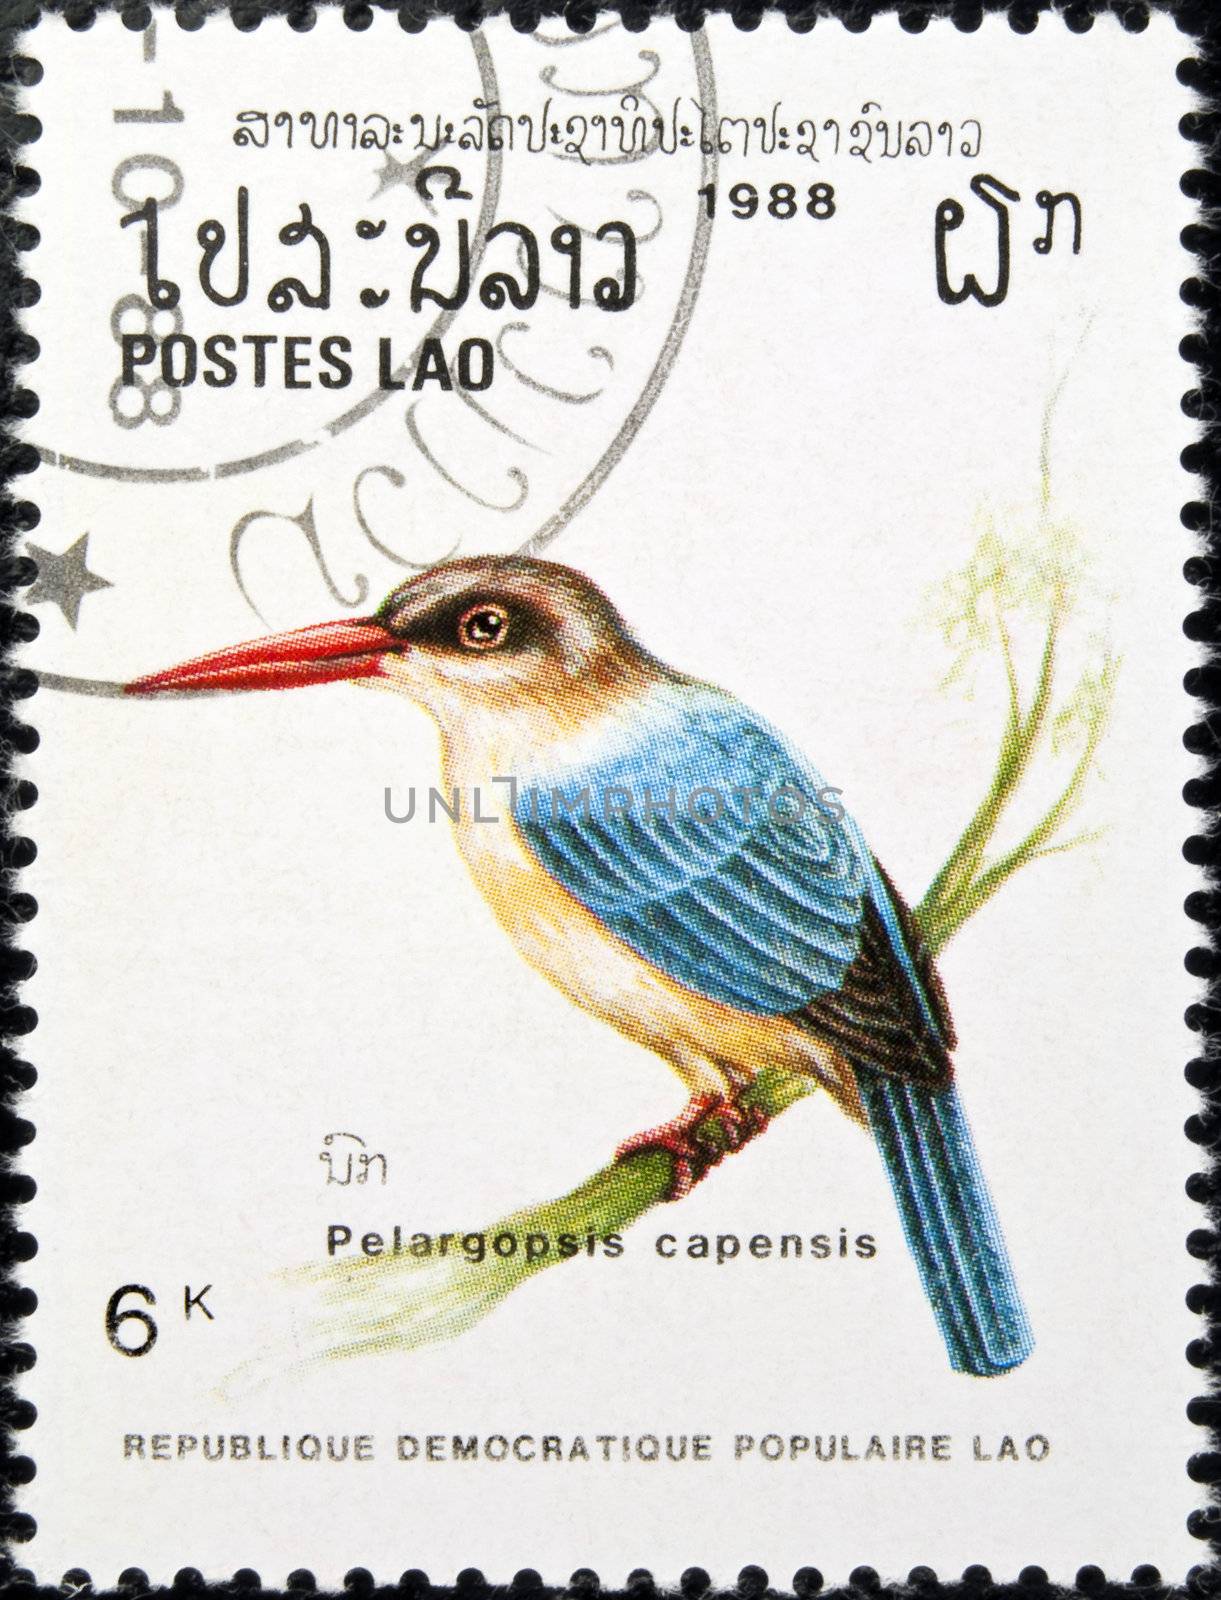 Stork-billed kingfisher bird stamp. by FER737NG